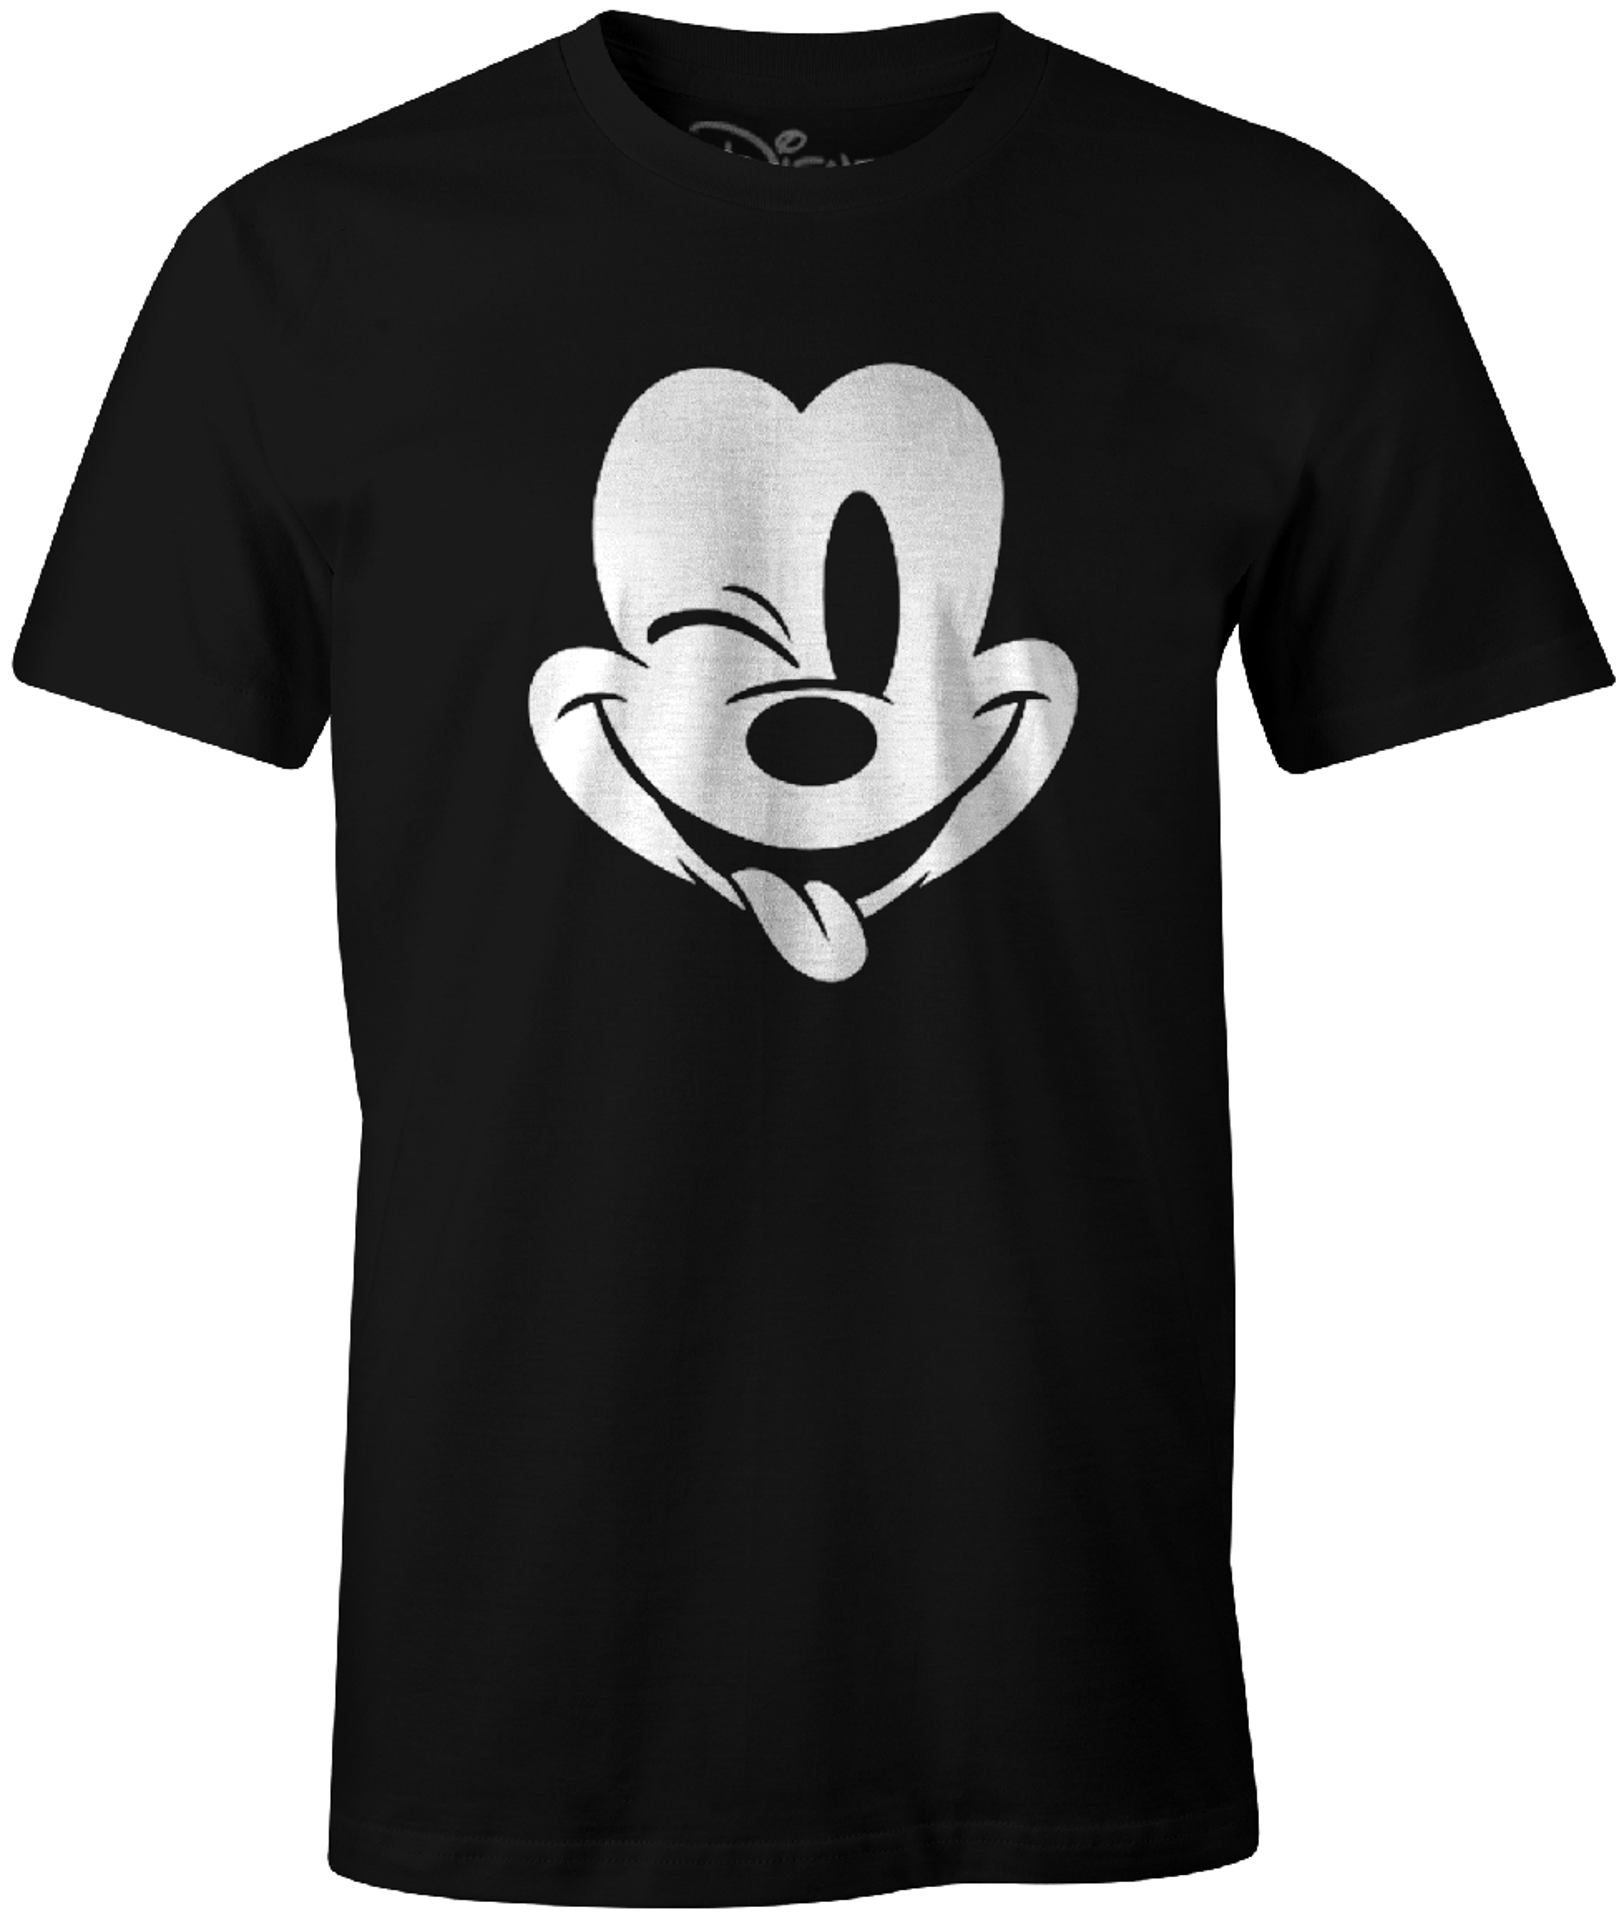 Disney - T-Shirt Noir Mickey Mouse faisant un clin d'oeil - XXL